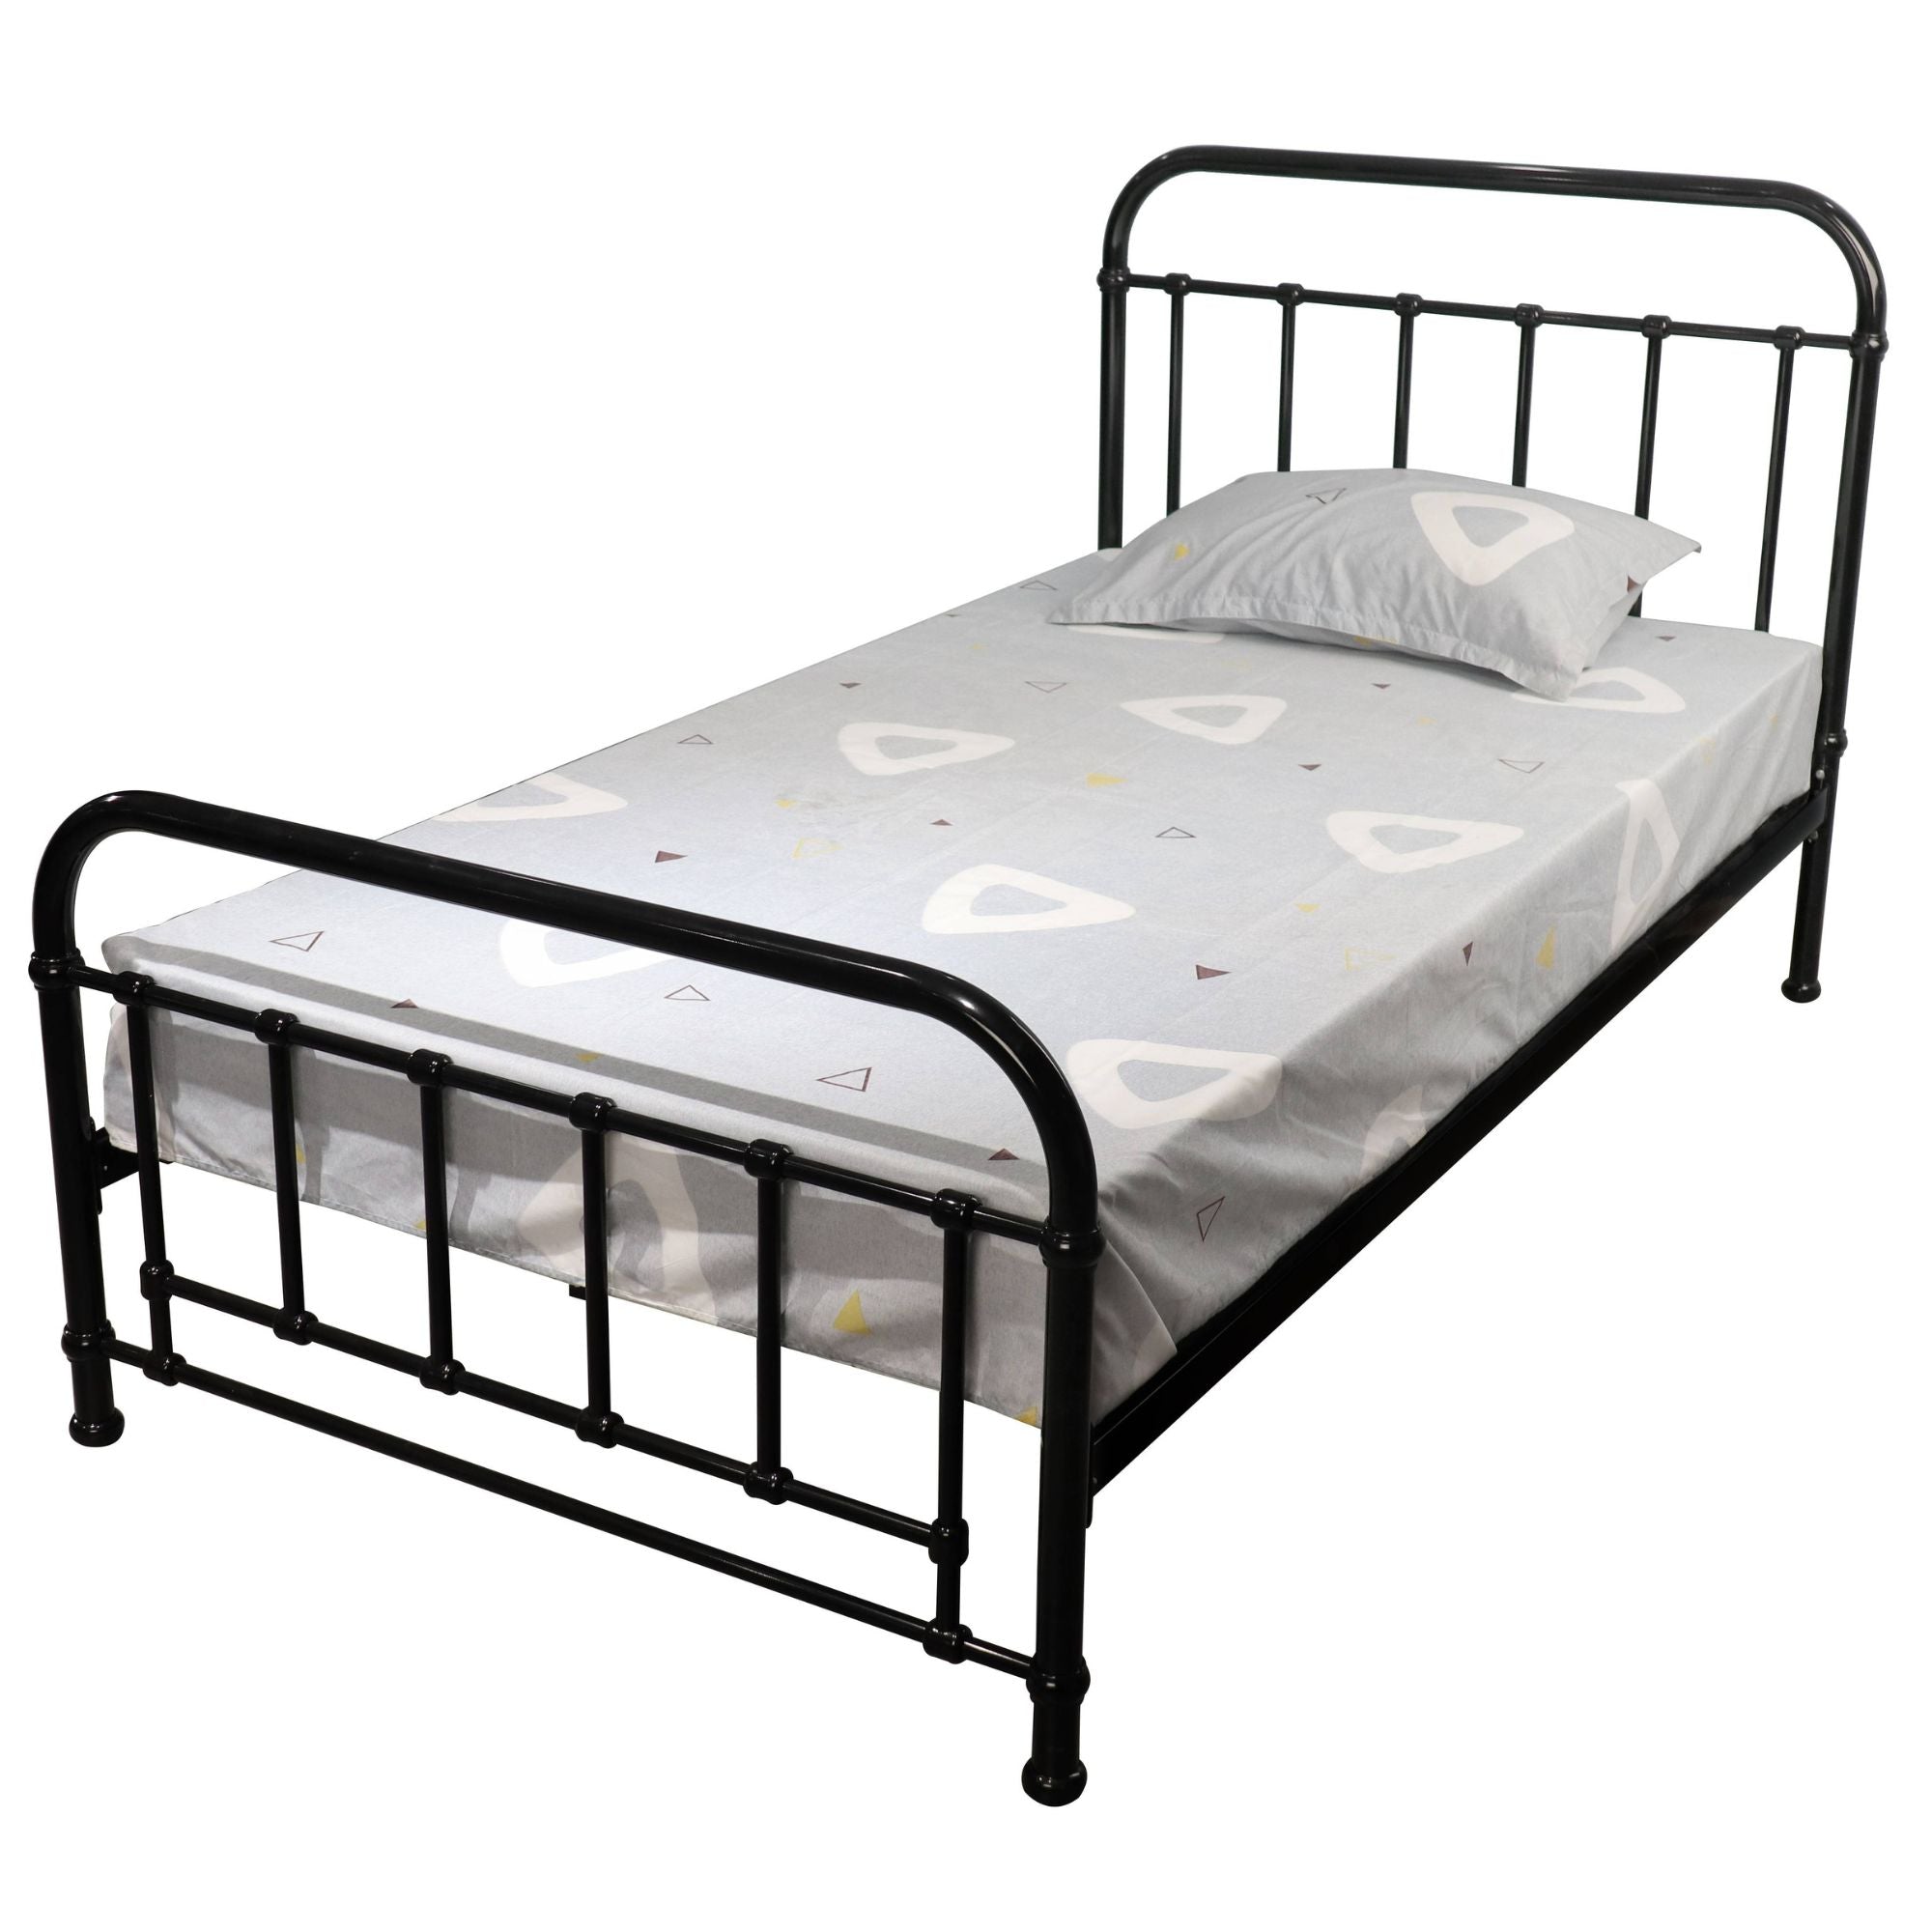 Back In Stock! King Single Size Metal Bed Frame - Black